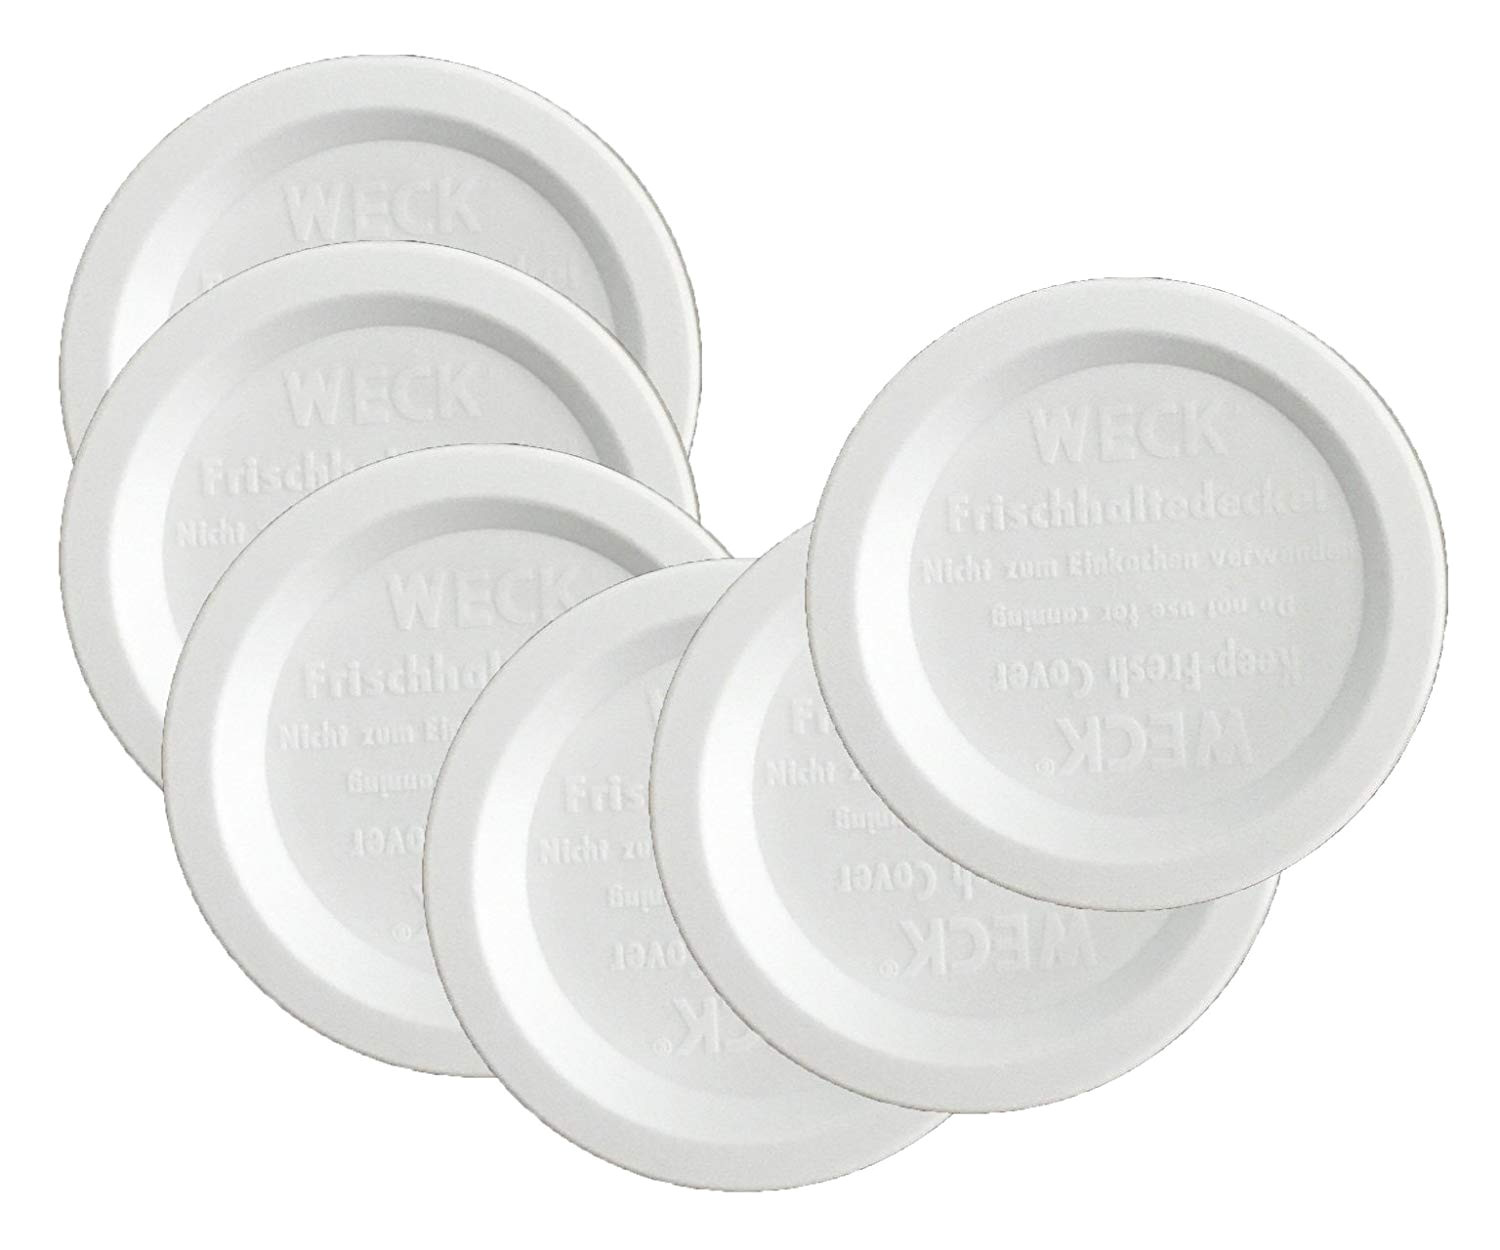 amazon com weck jar keep fresh plastic lids 6 pack small 60mm fits models 080 755 760 762 902 763 764 766 905 975 995 beauty